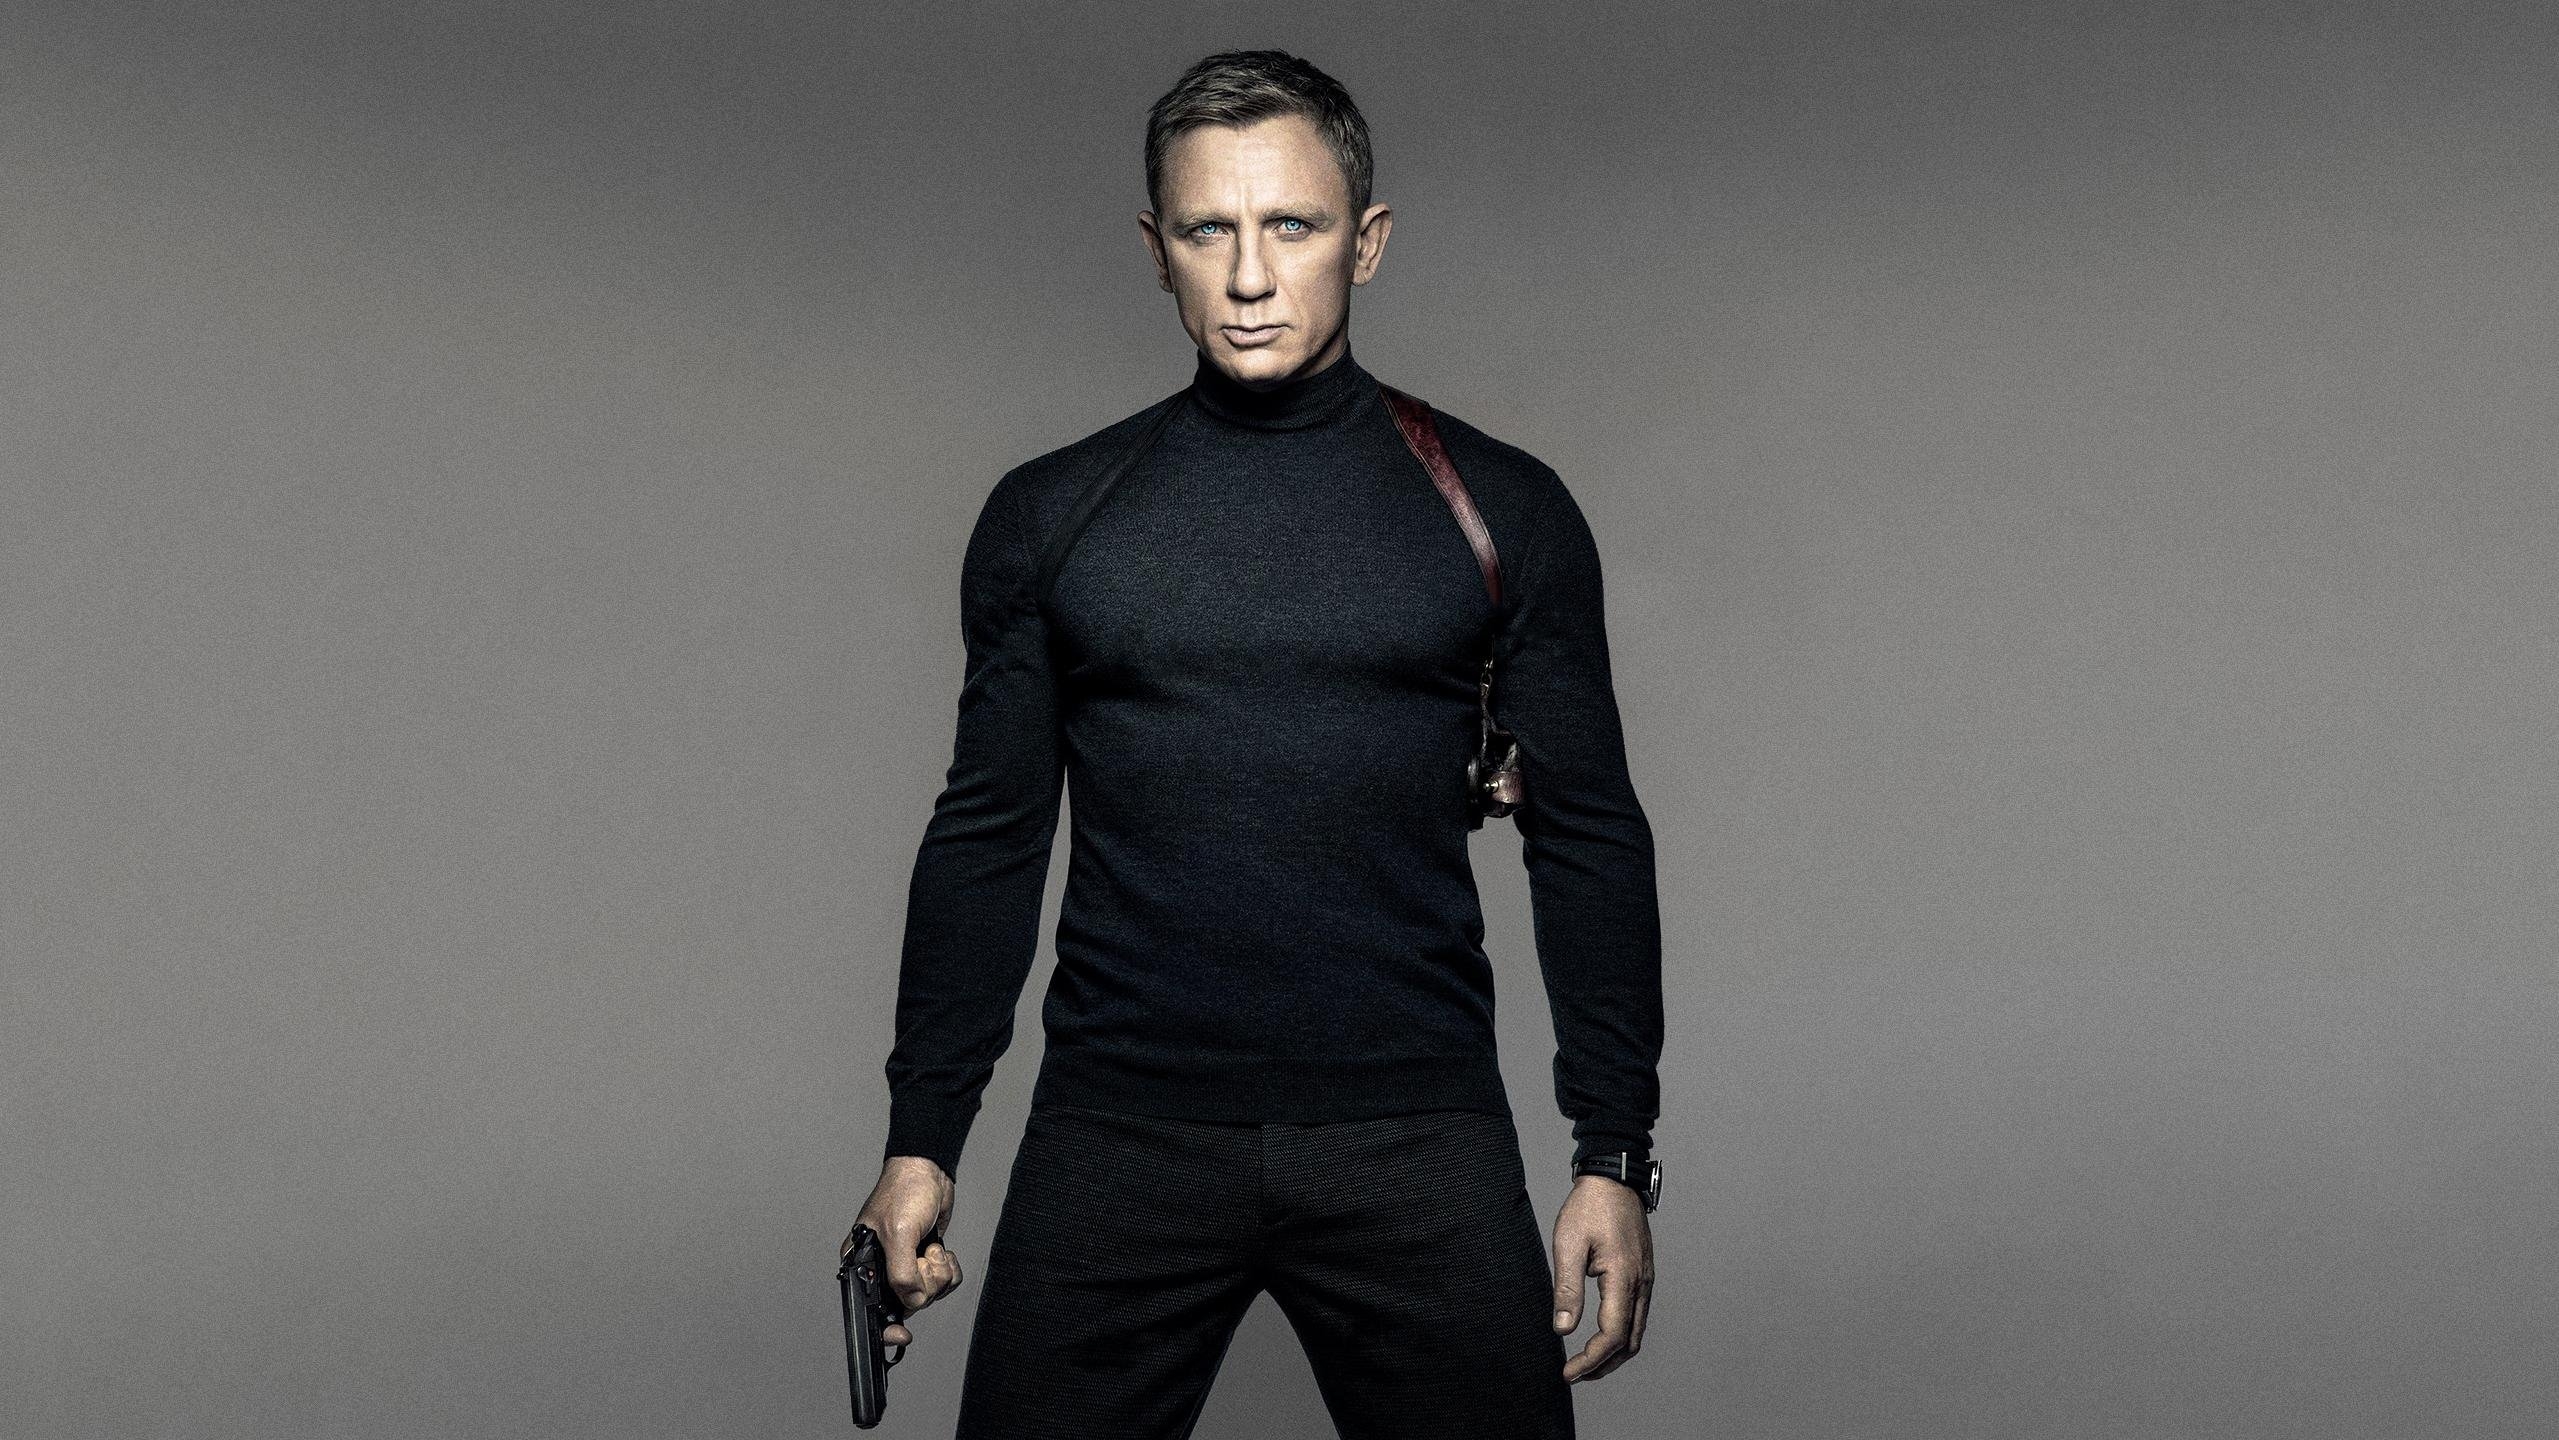 People 2559x1440 Daniel Craig James Bond simple background movies gun men actor standing gray background 007